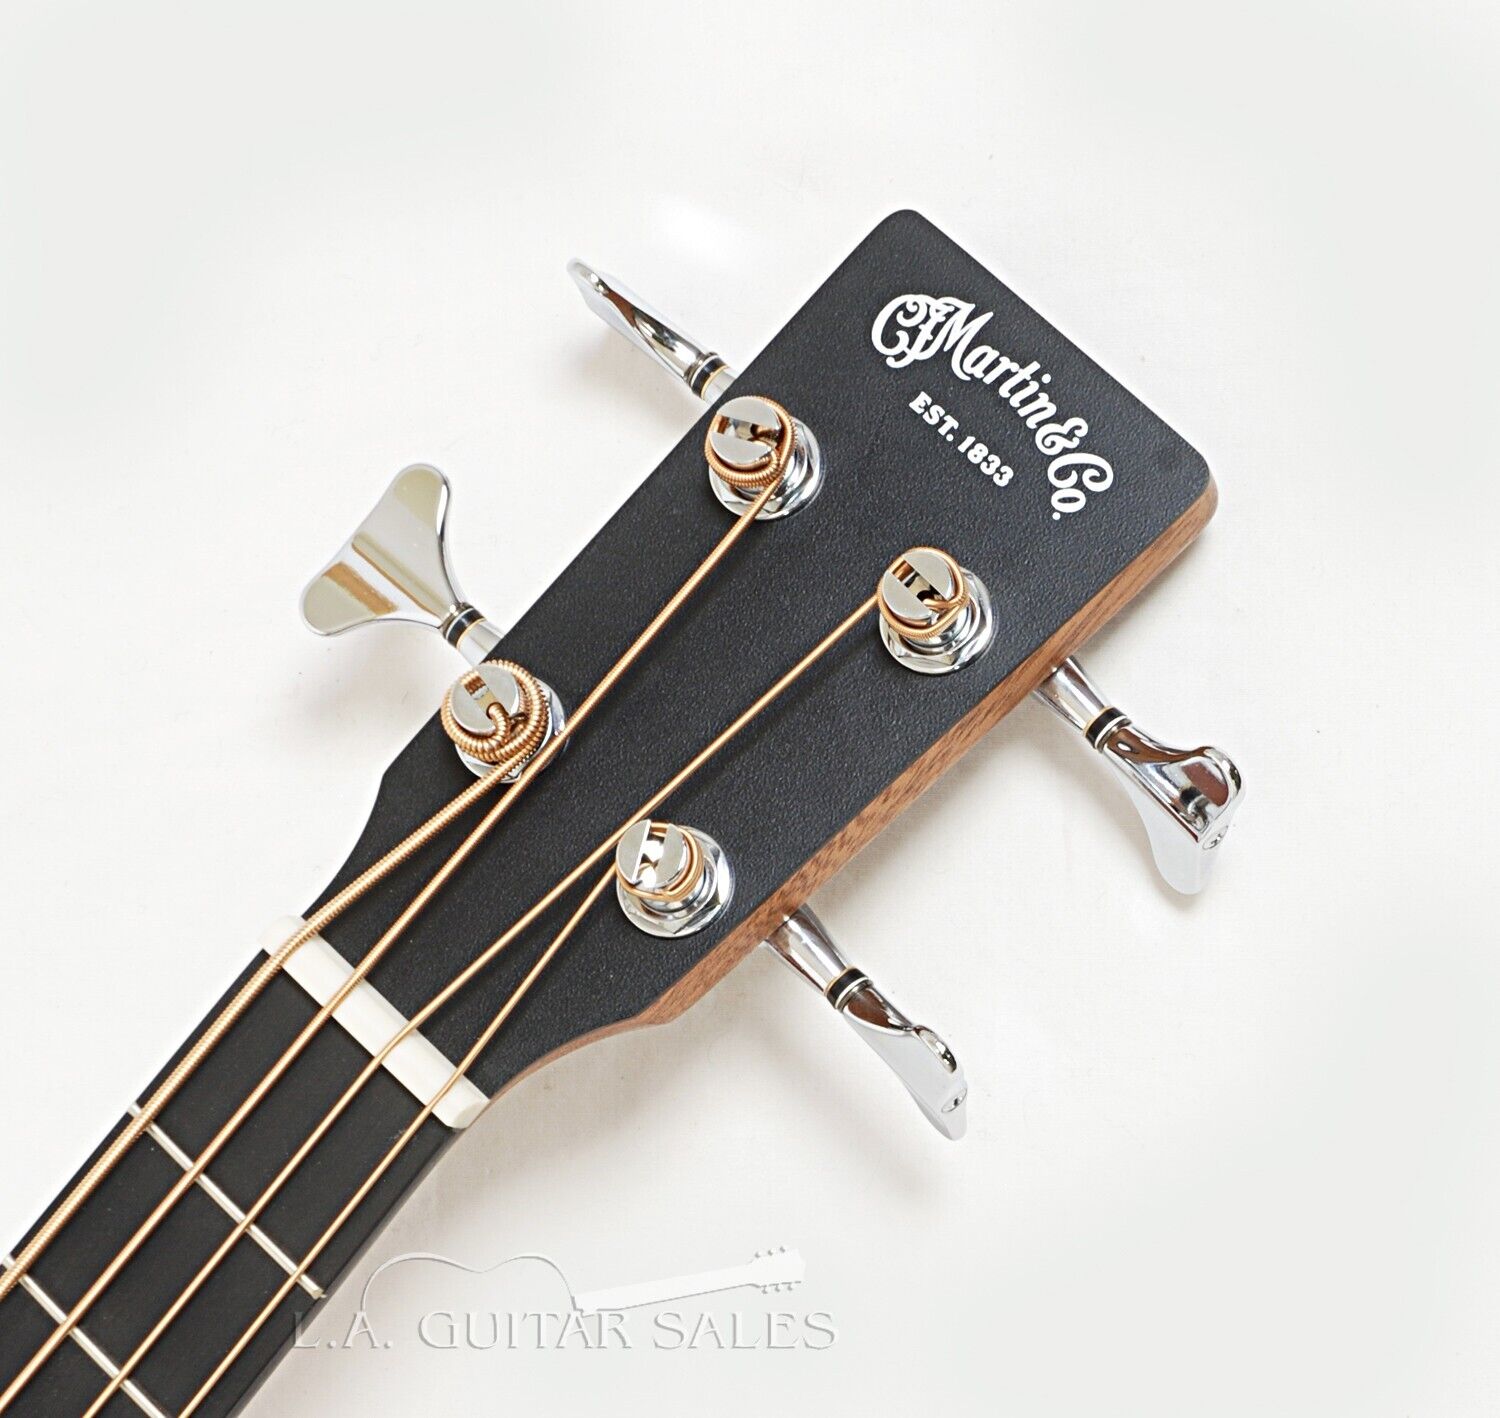 Martin DJR-10E Acoustic Bass Burst #36418 @ LA Guitar Sales 5